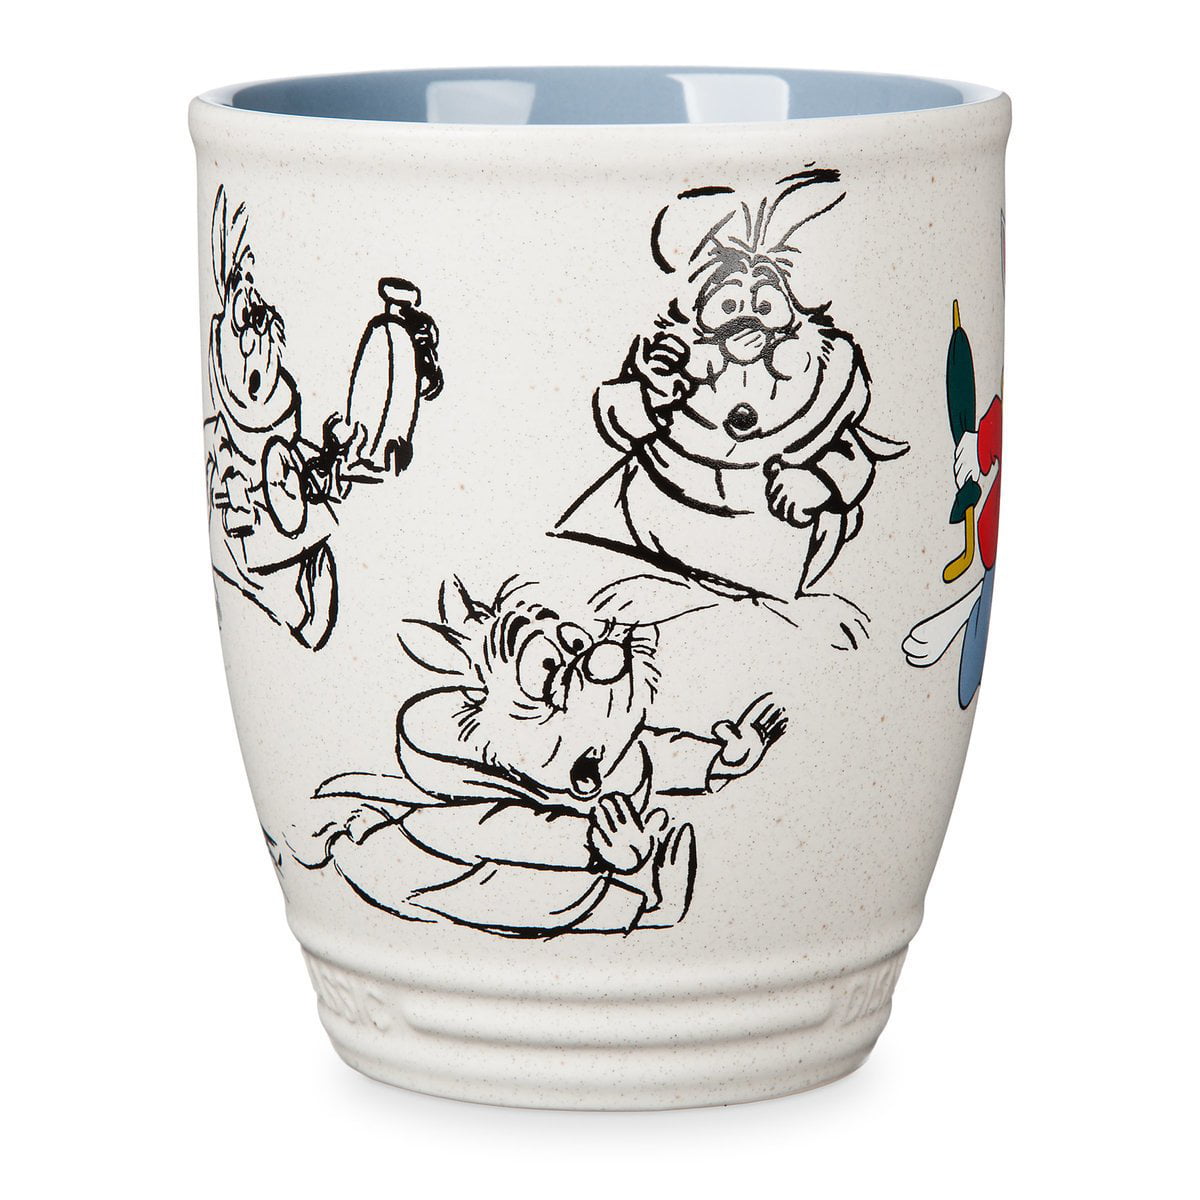 Disney White Rabbit Mug Alice in Wonderland Classic Collection